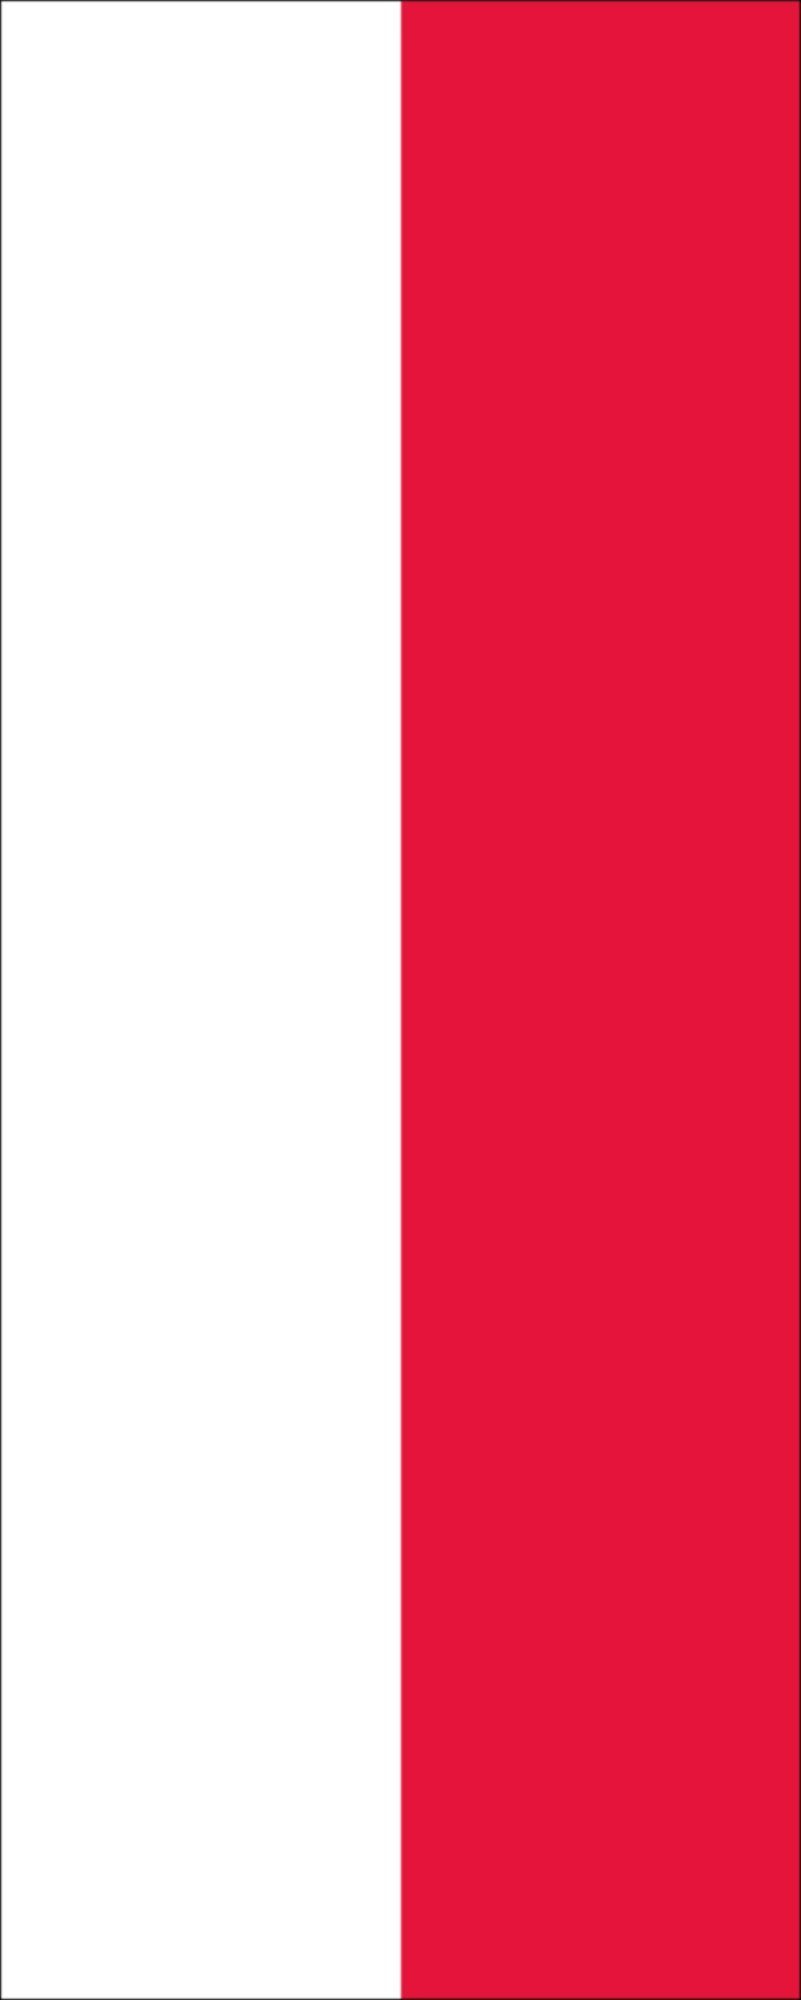 flaggenmeer Polen Hochformat g/m² Flagge 160